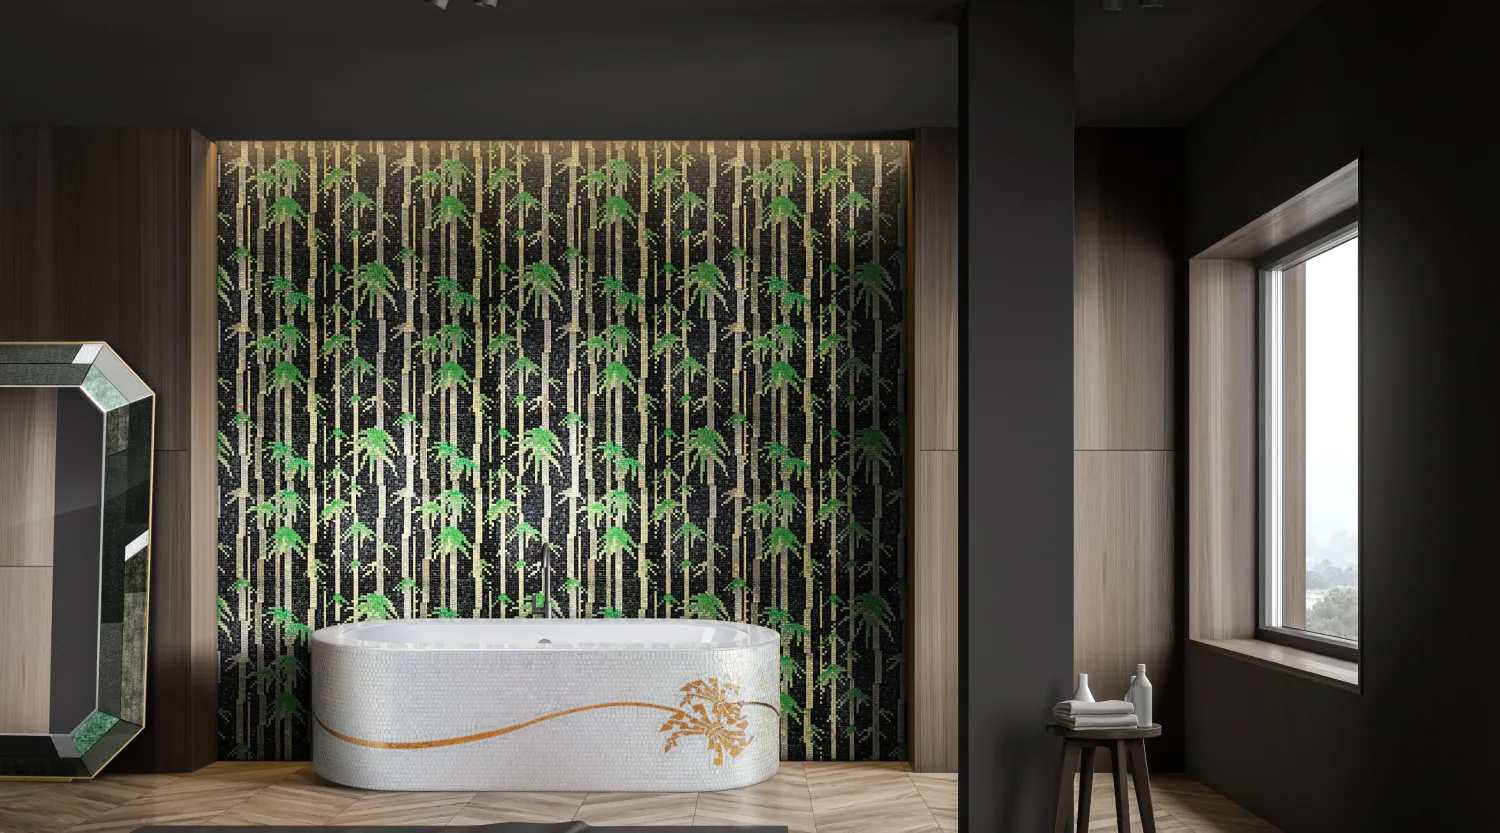 <h2>Decorate a bathroom with glamorous mosaics</h2>
